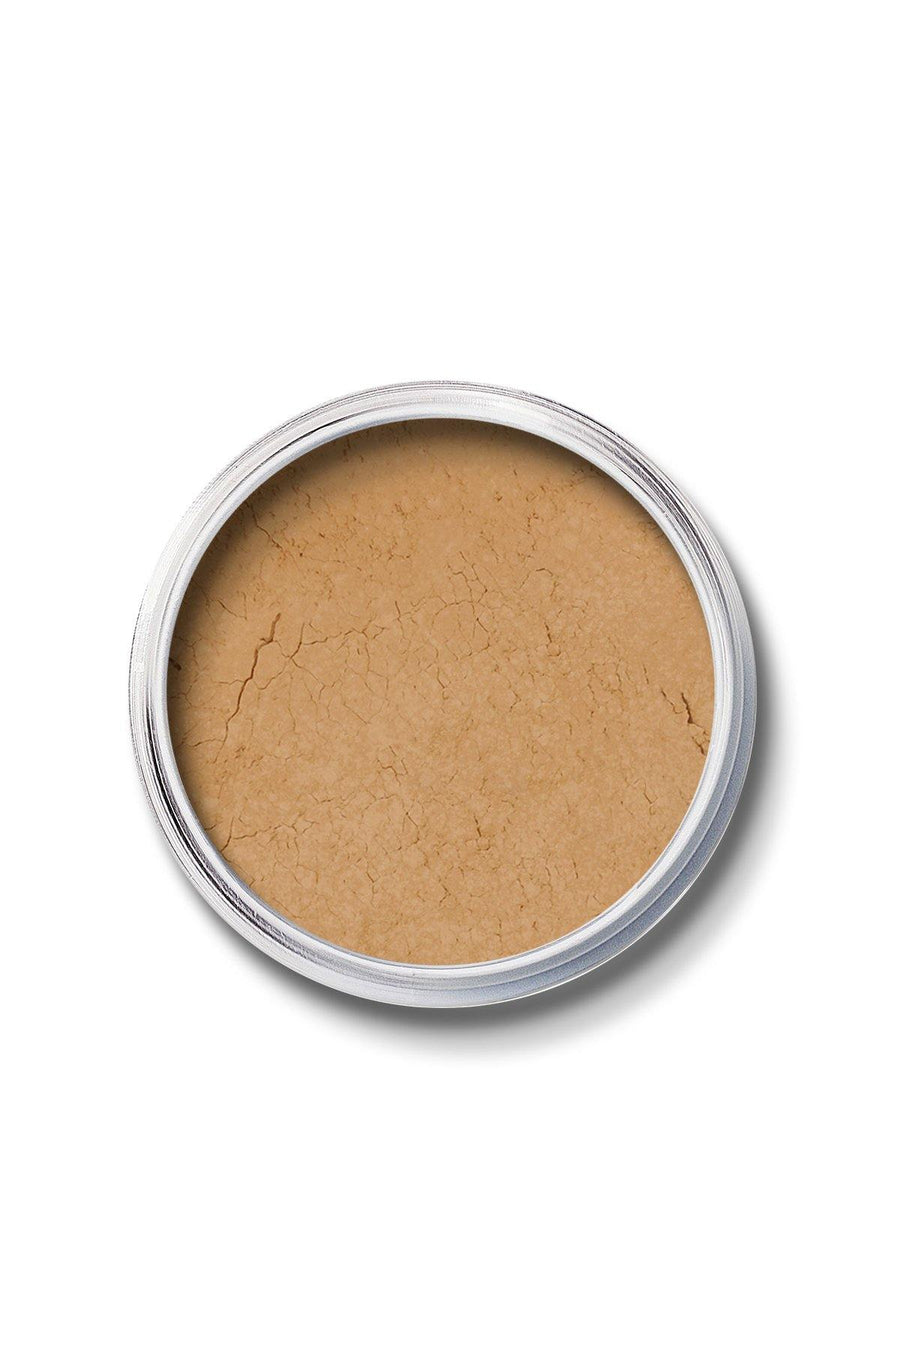 Mineral SPF 15 Foundation #5 - Honey - Blend Mineral Cosmetics